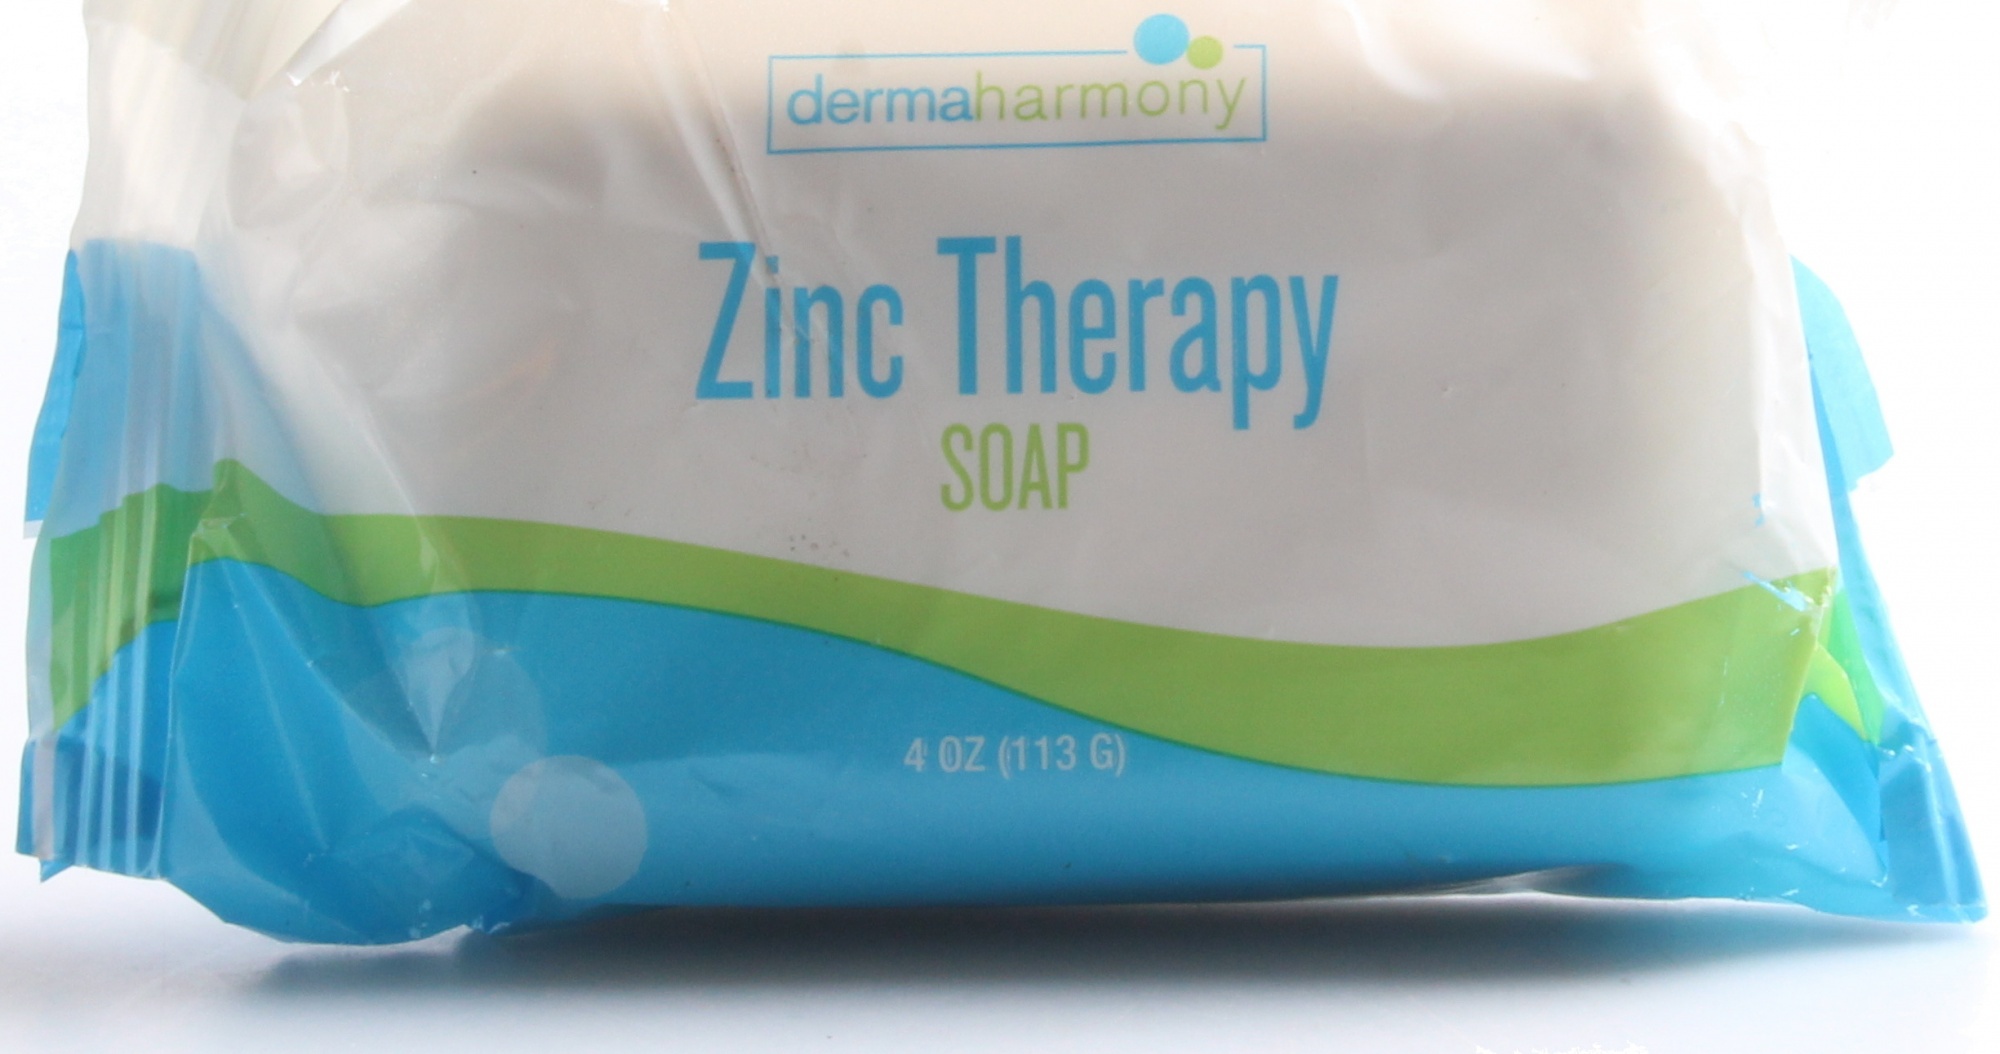 Dermaharmony Zinc Therapy Soap